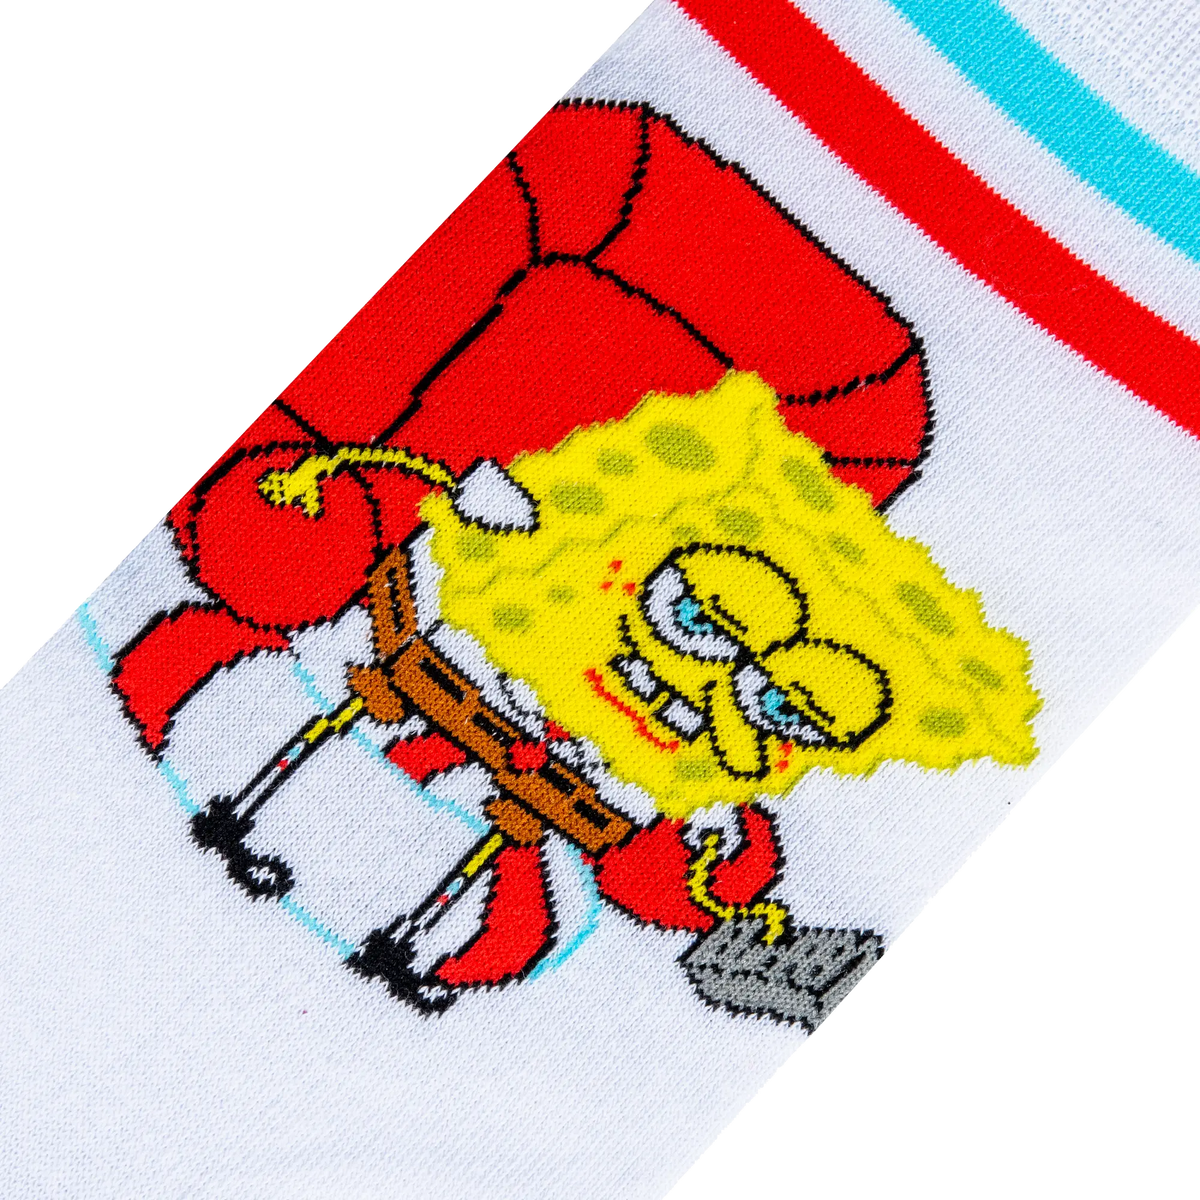 Spongebob - Imma Head Out Socks - Womens